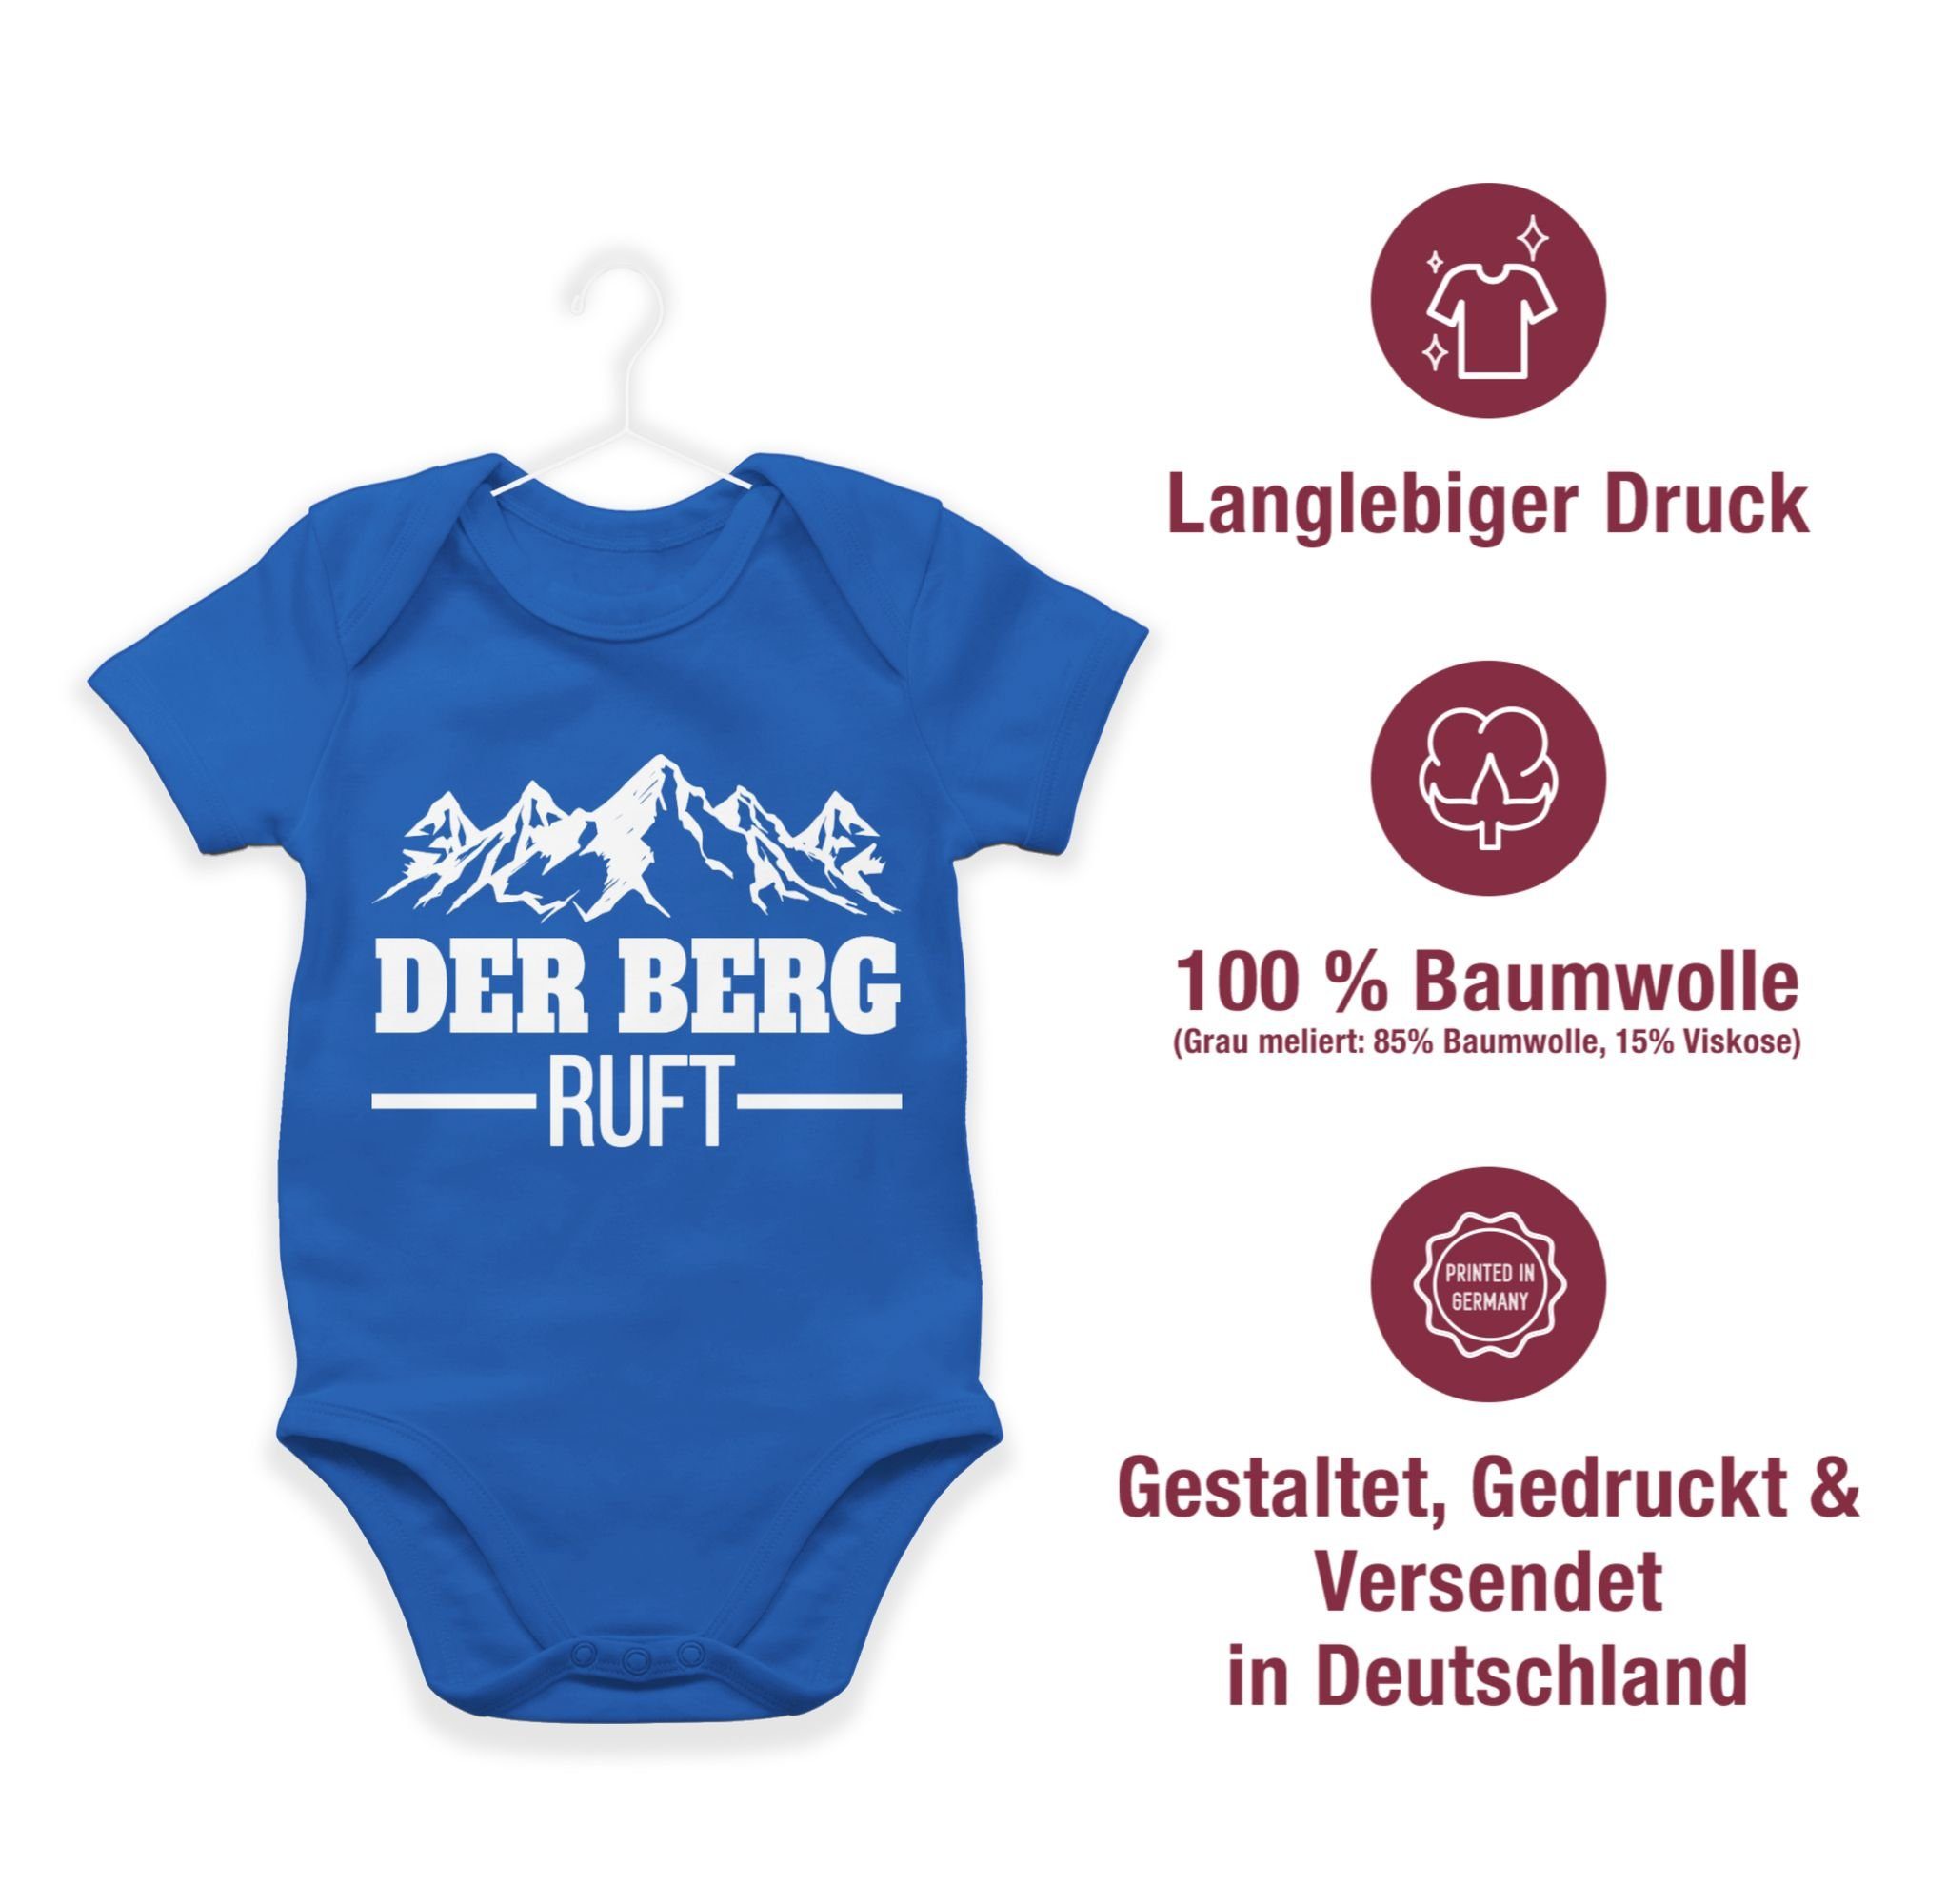 Shirtracer Shirtbody Royalblau Bewegung ruft Der 3 Baby & Sport Berg